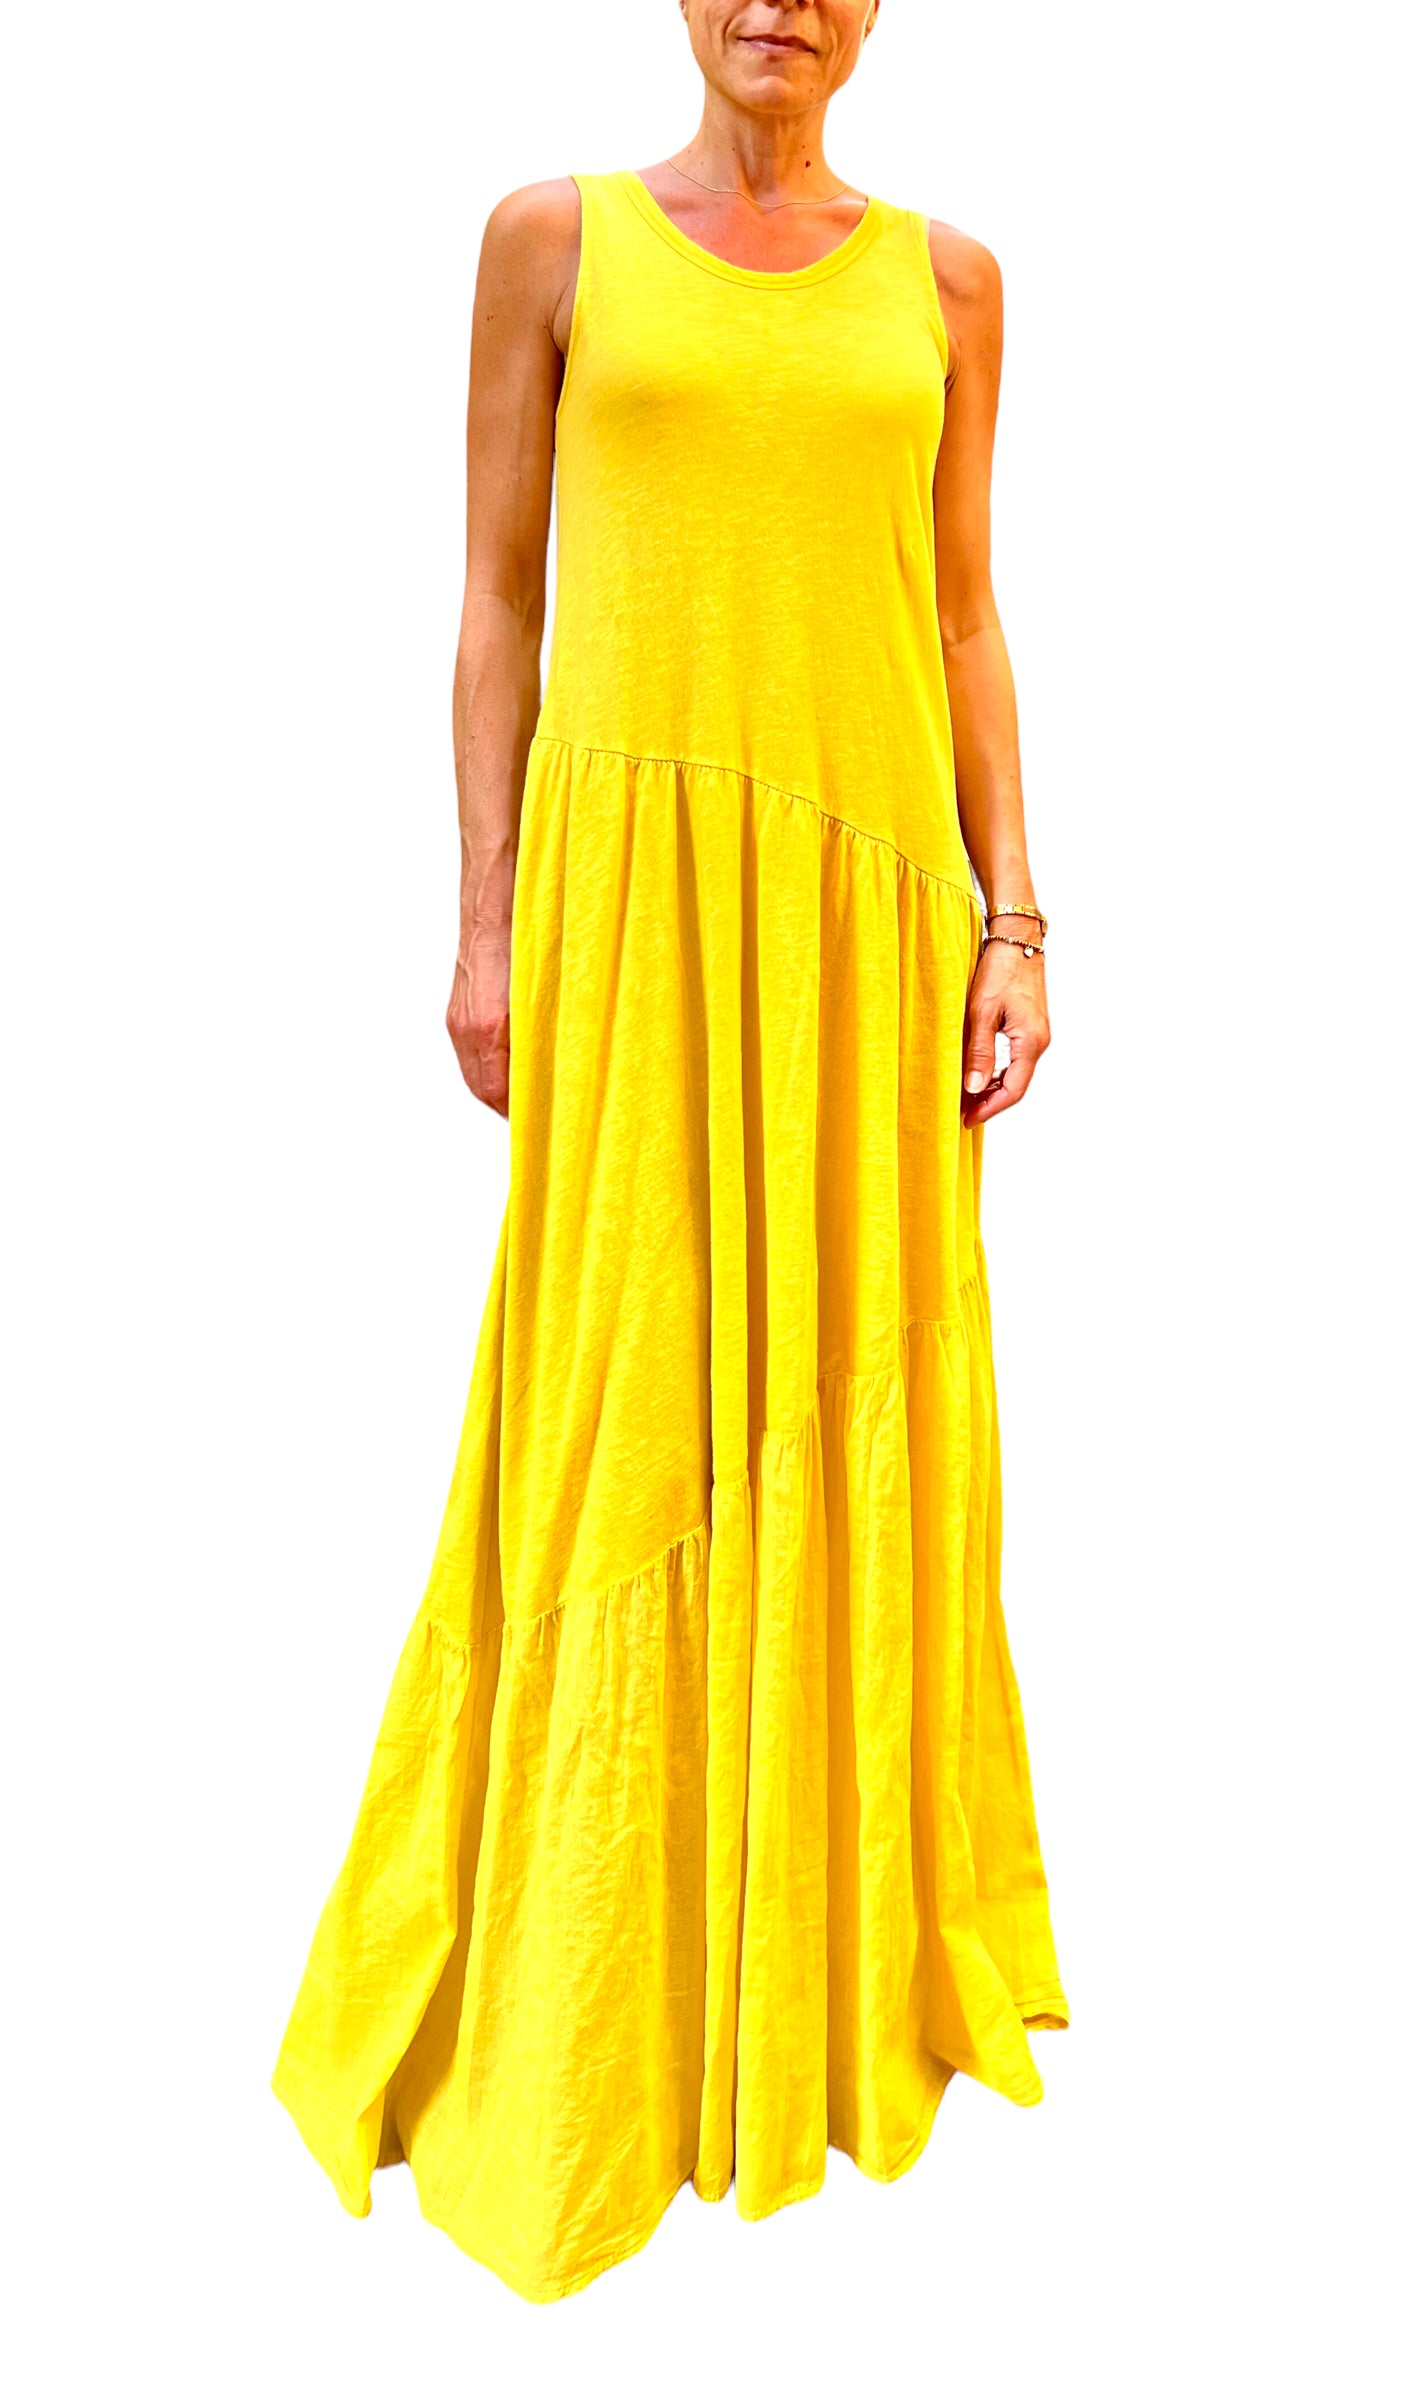 Kontatto yellow dress